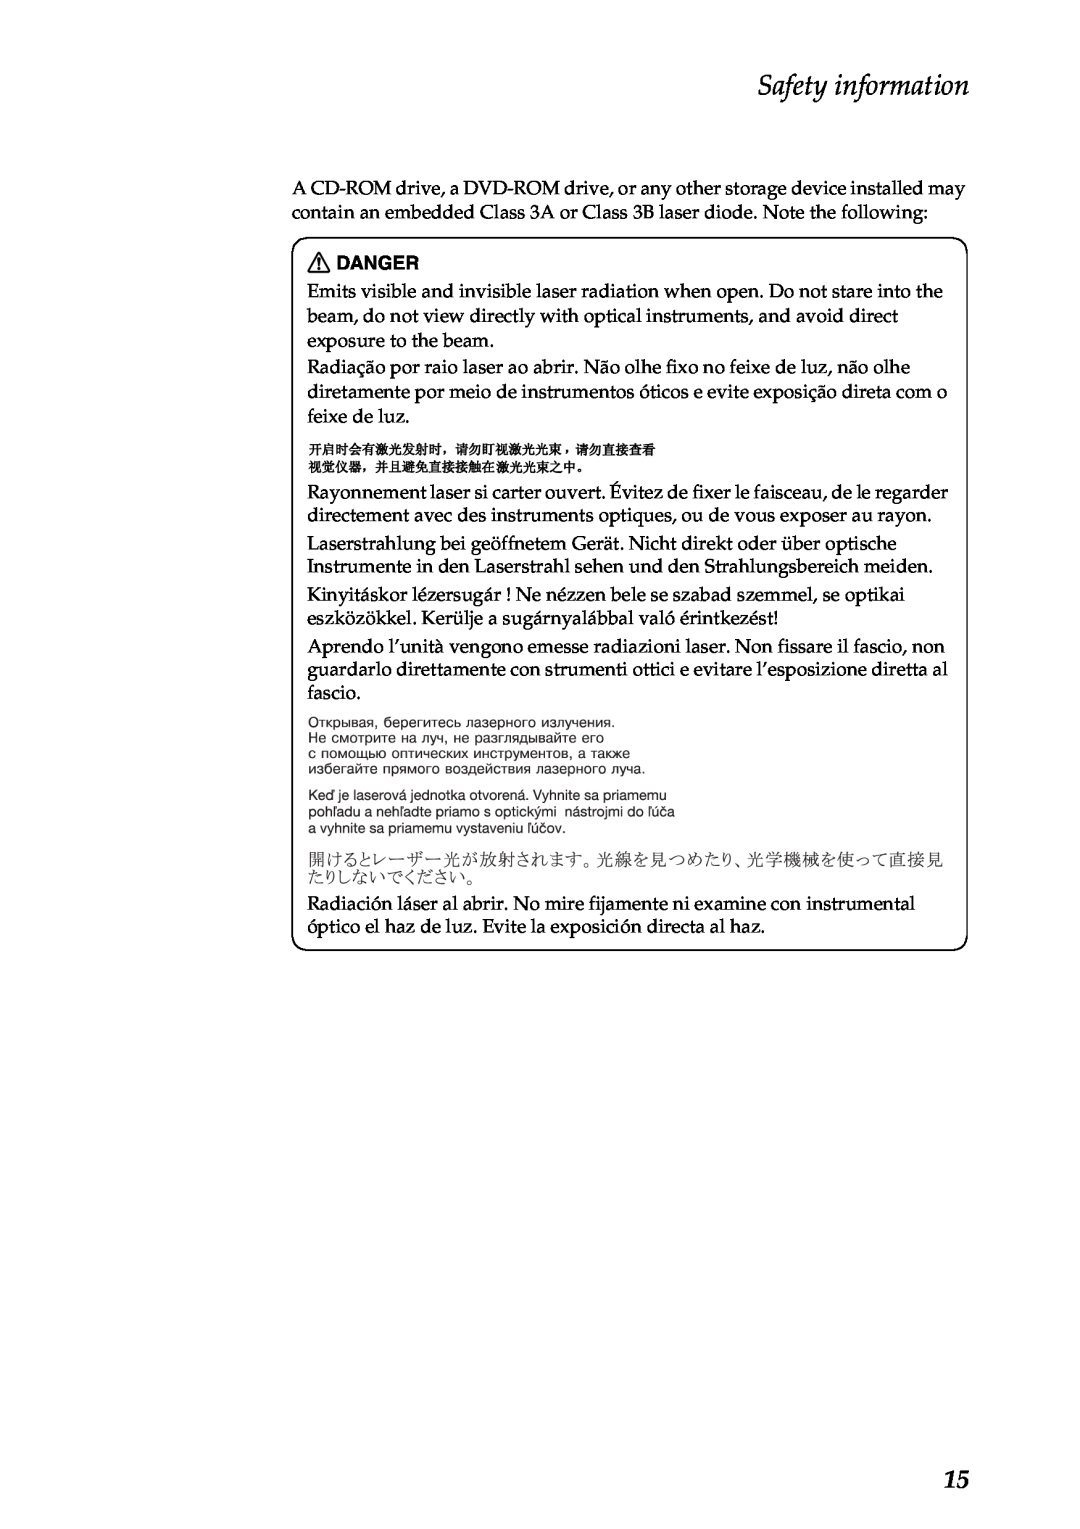 Lenovo S200, S206 manual Safety information, Danger 